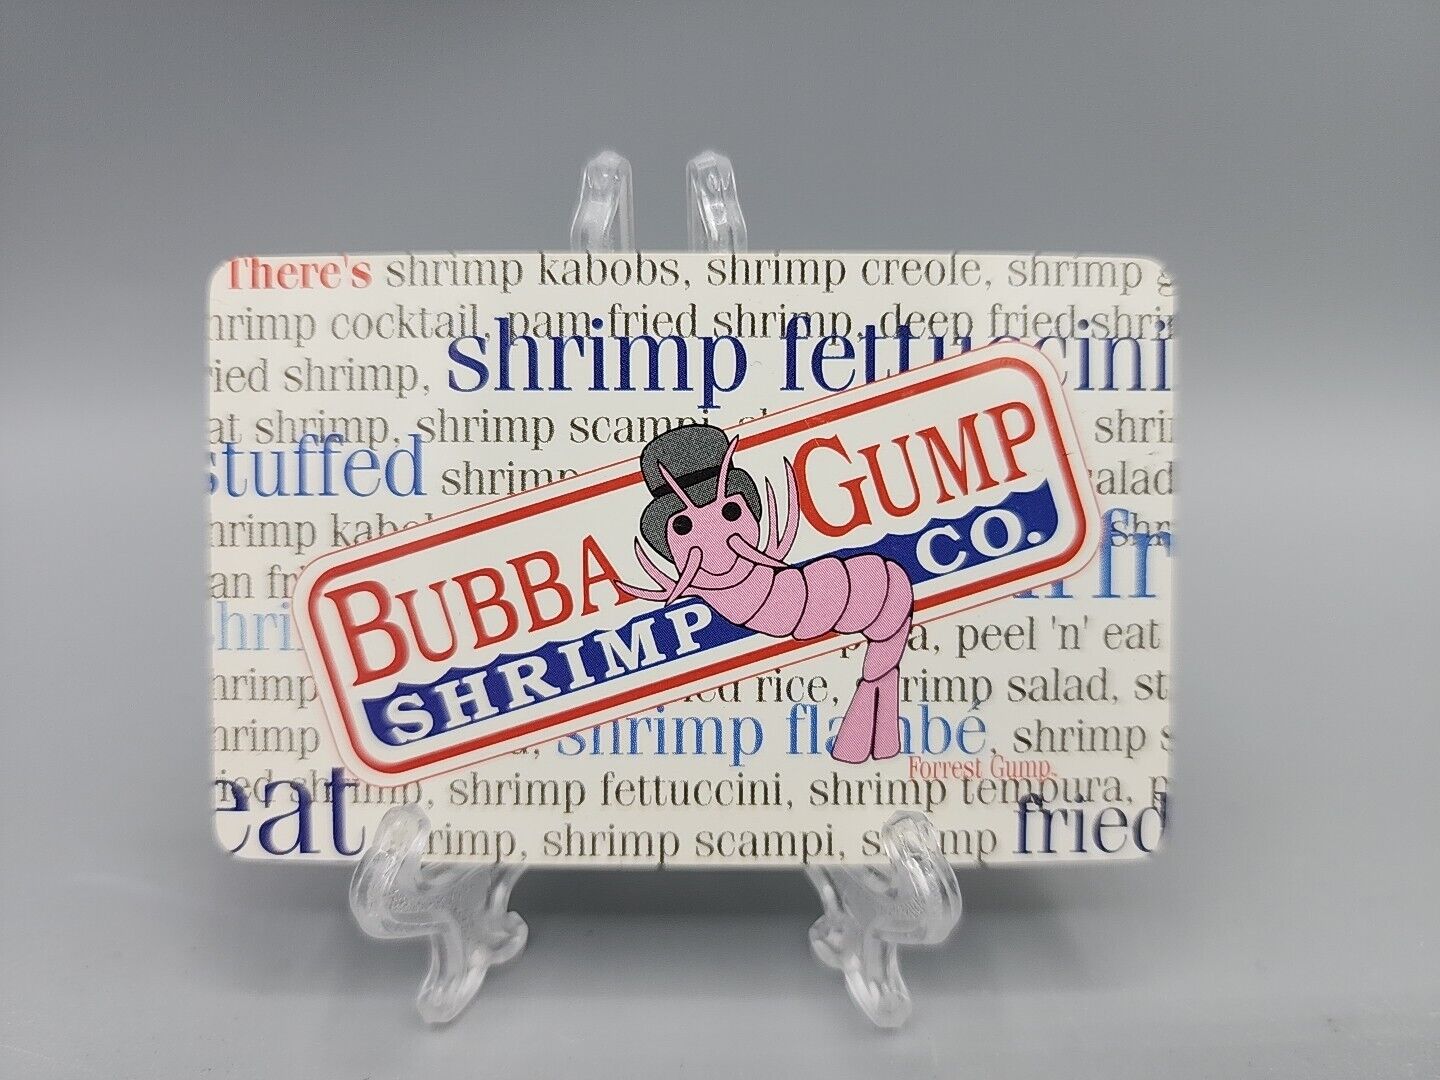 Bubba Gump Shrimp Co. Plastic Wallet Trading Card 1994 Paramount Forrest Gump 